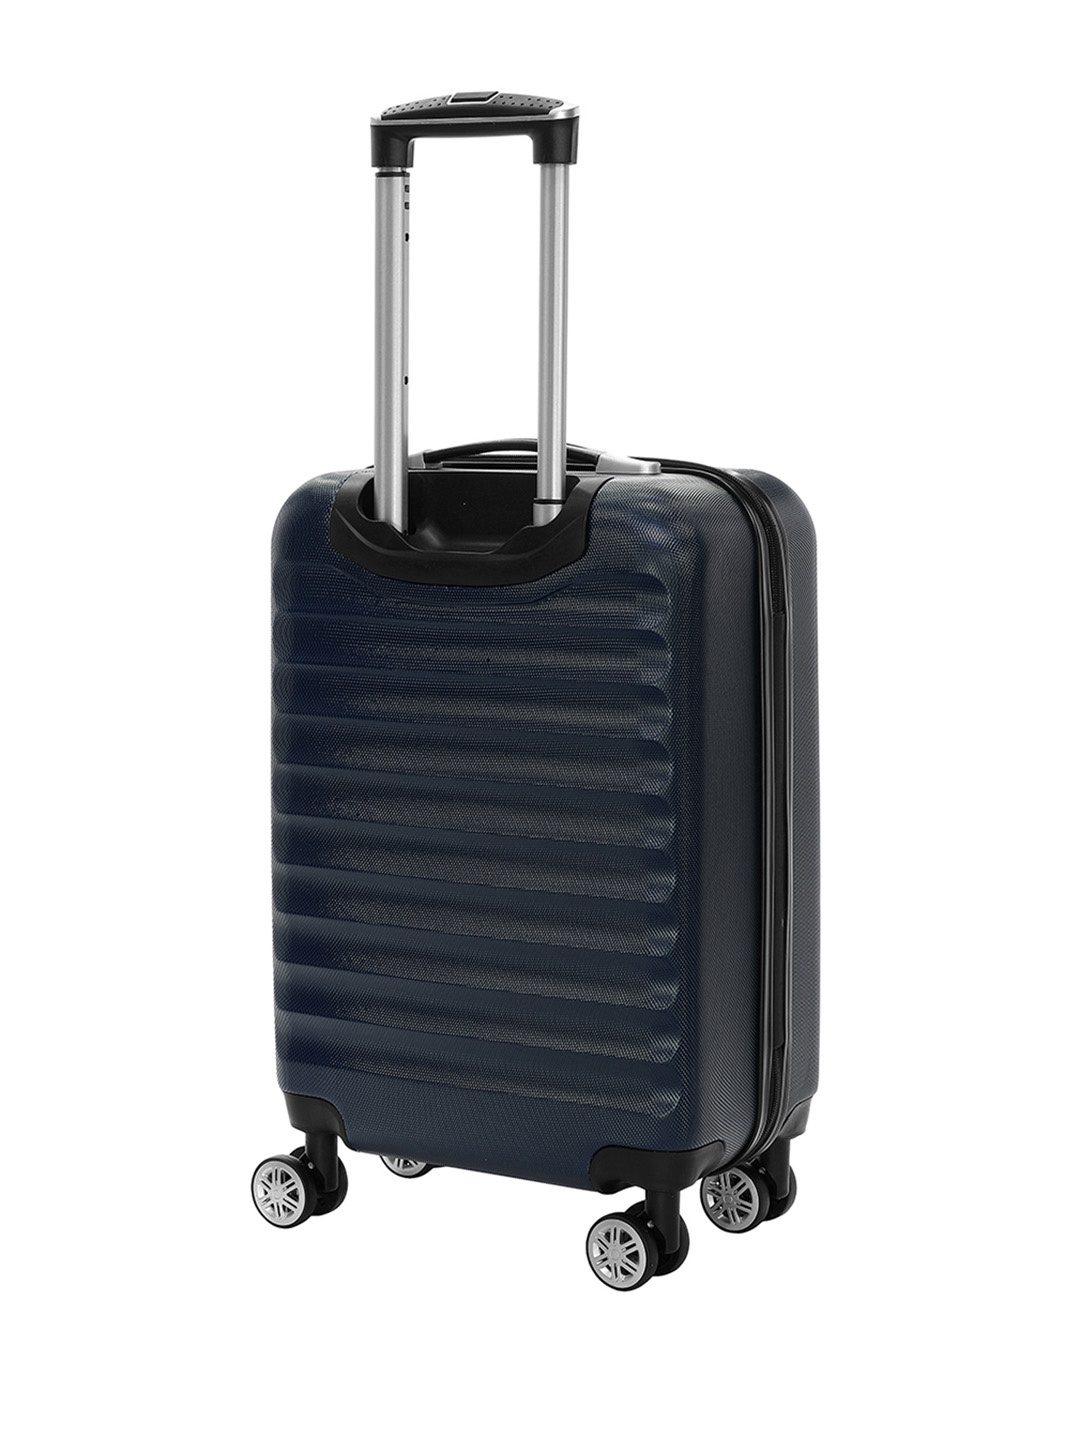 Фото Средний чемодан на колесах из ABS пластика темно-синего цвета Чемоданы